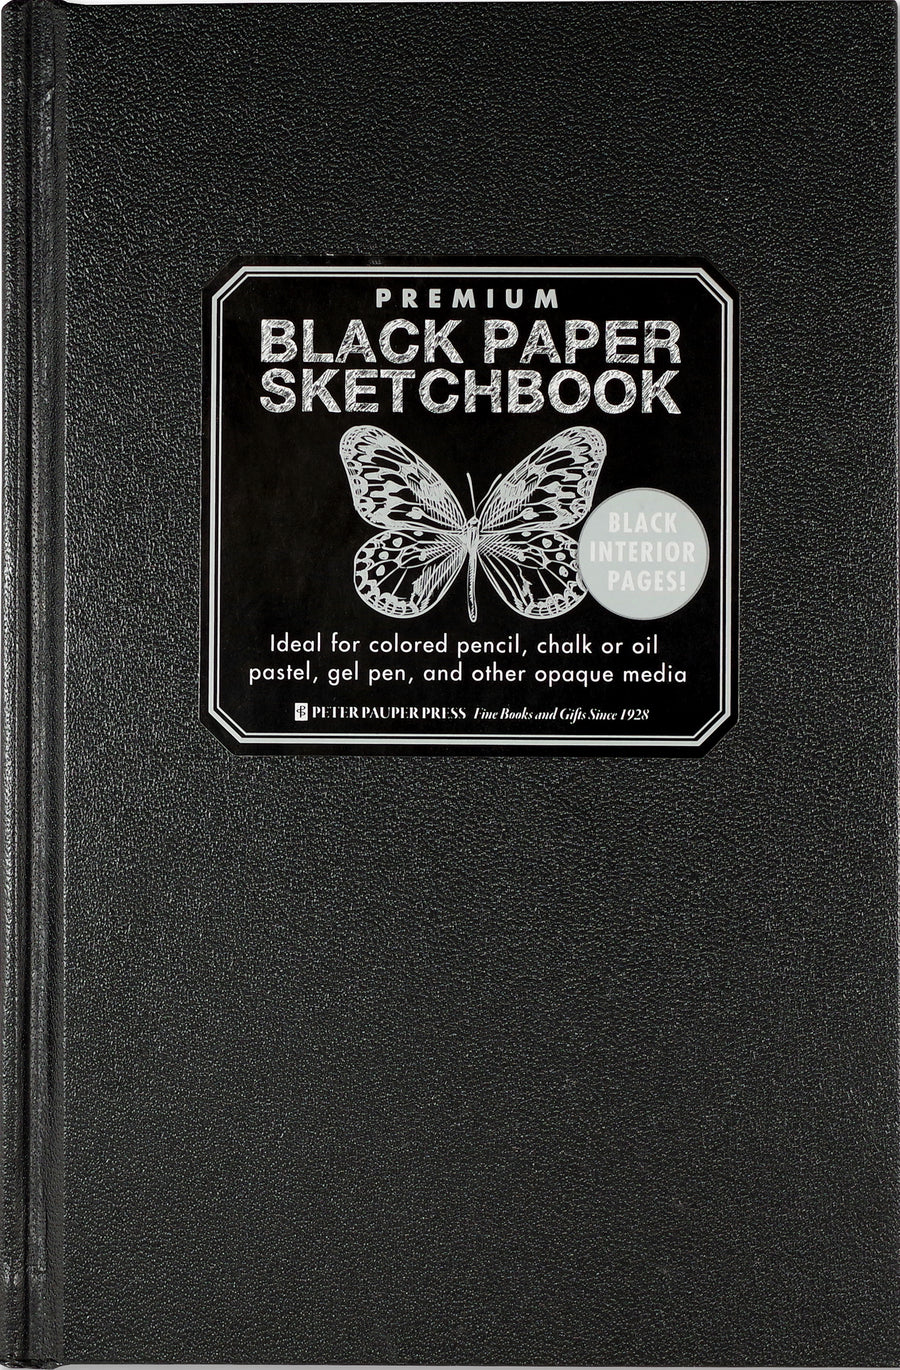 PREMIUM SKETCHBOOK BLACK PAPER